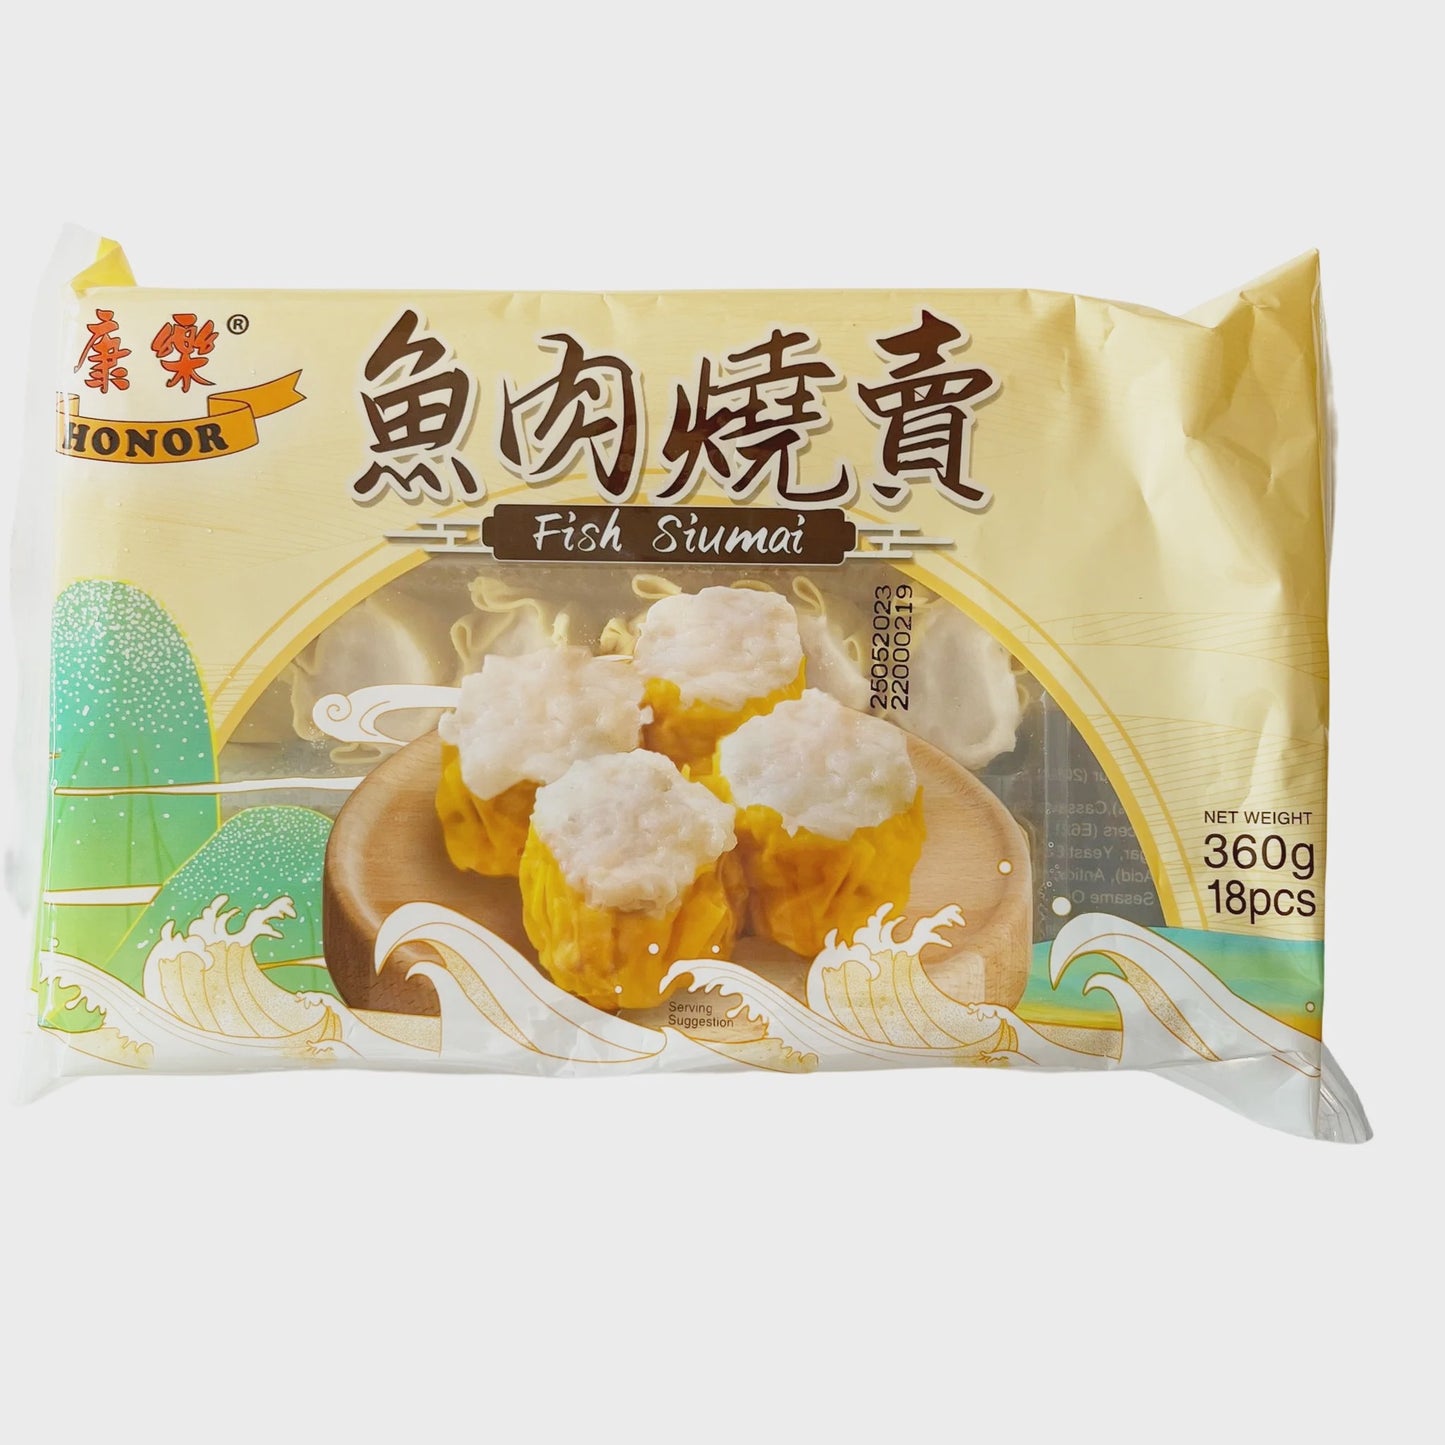 HR Fish Siu Mai 康樂燒賣-魚肉 Xiu Mai Nhan Ca 360g x1